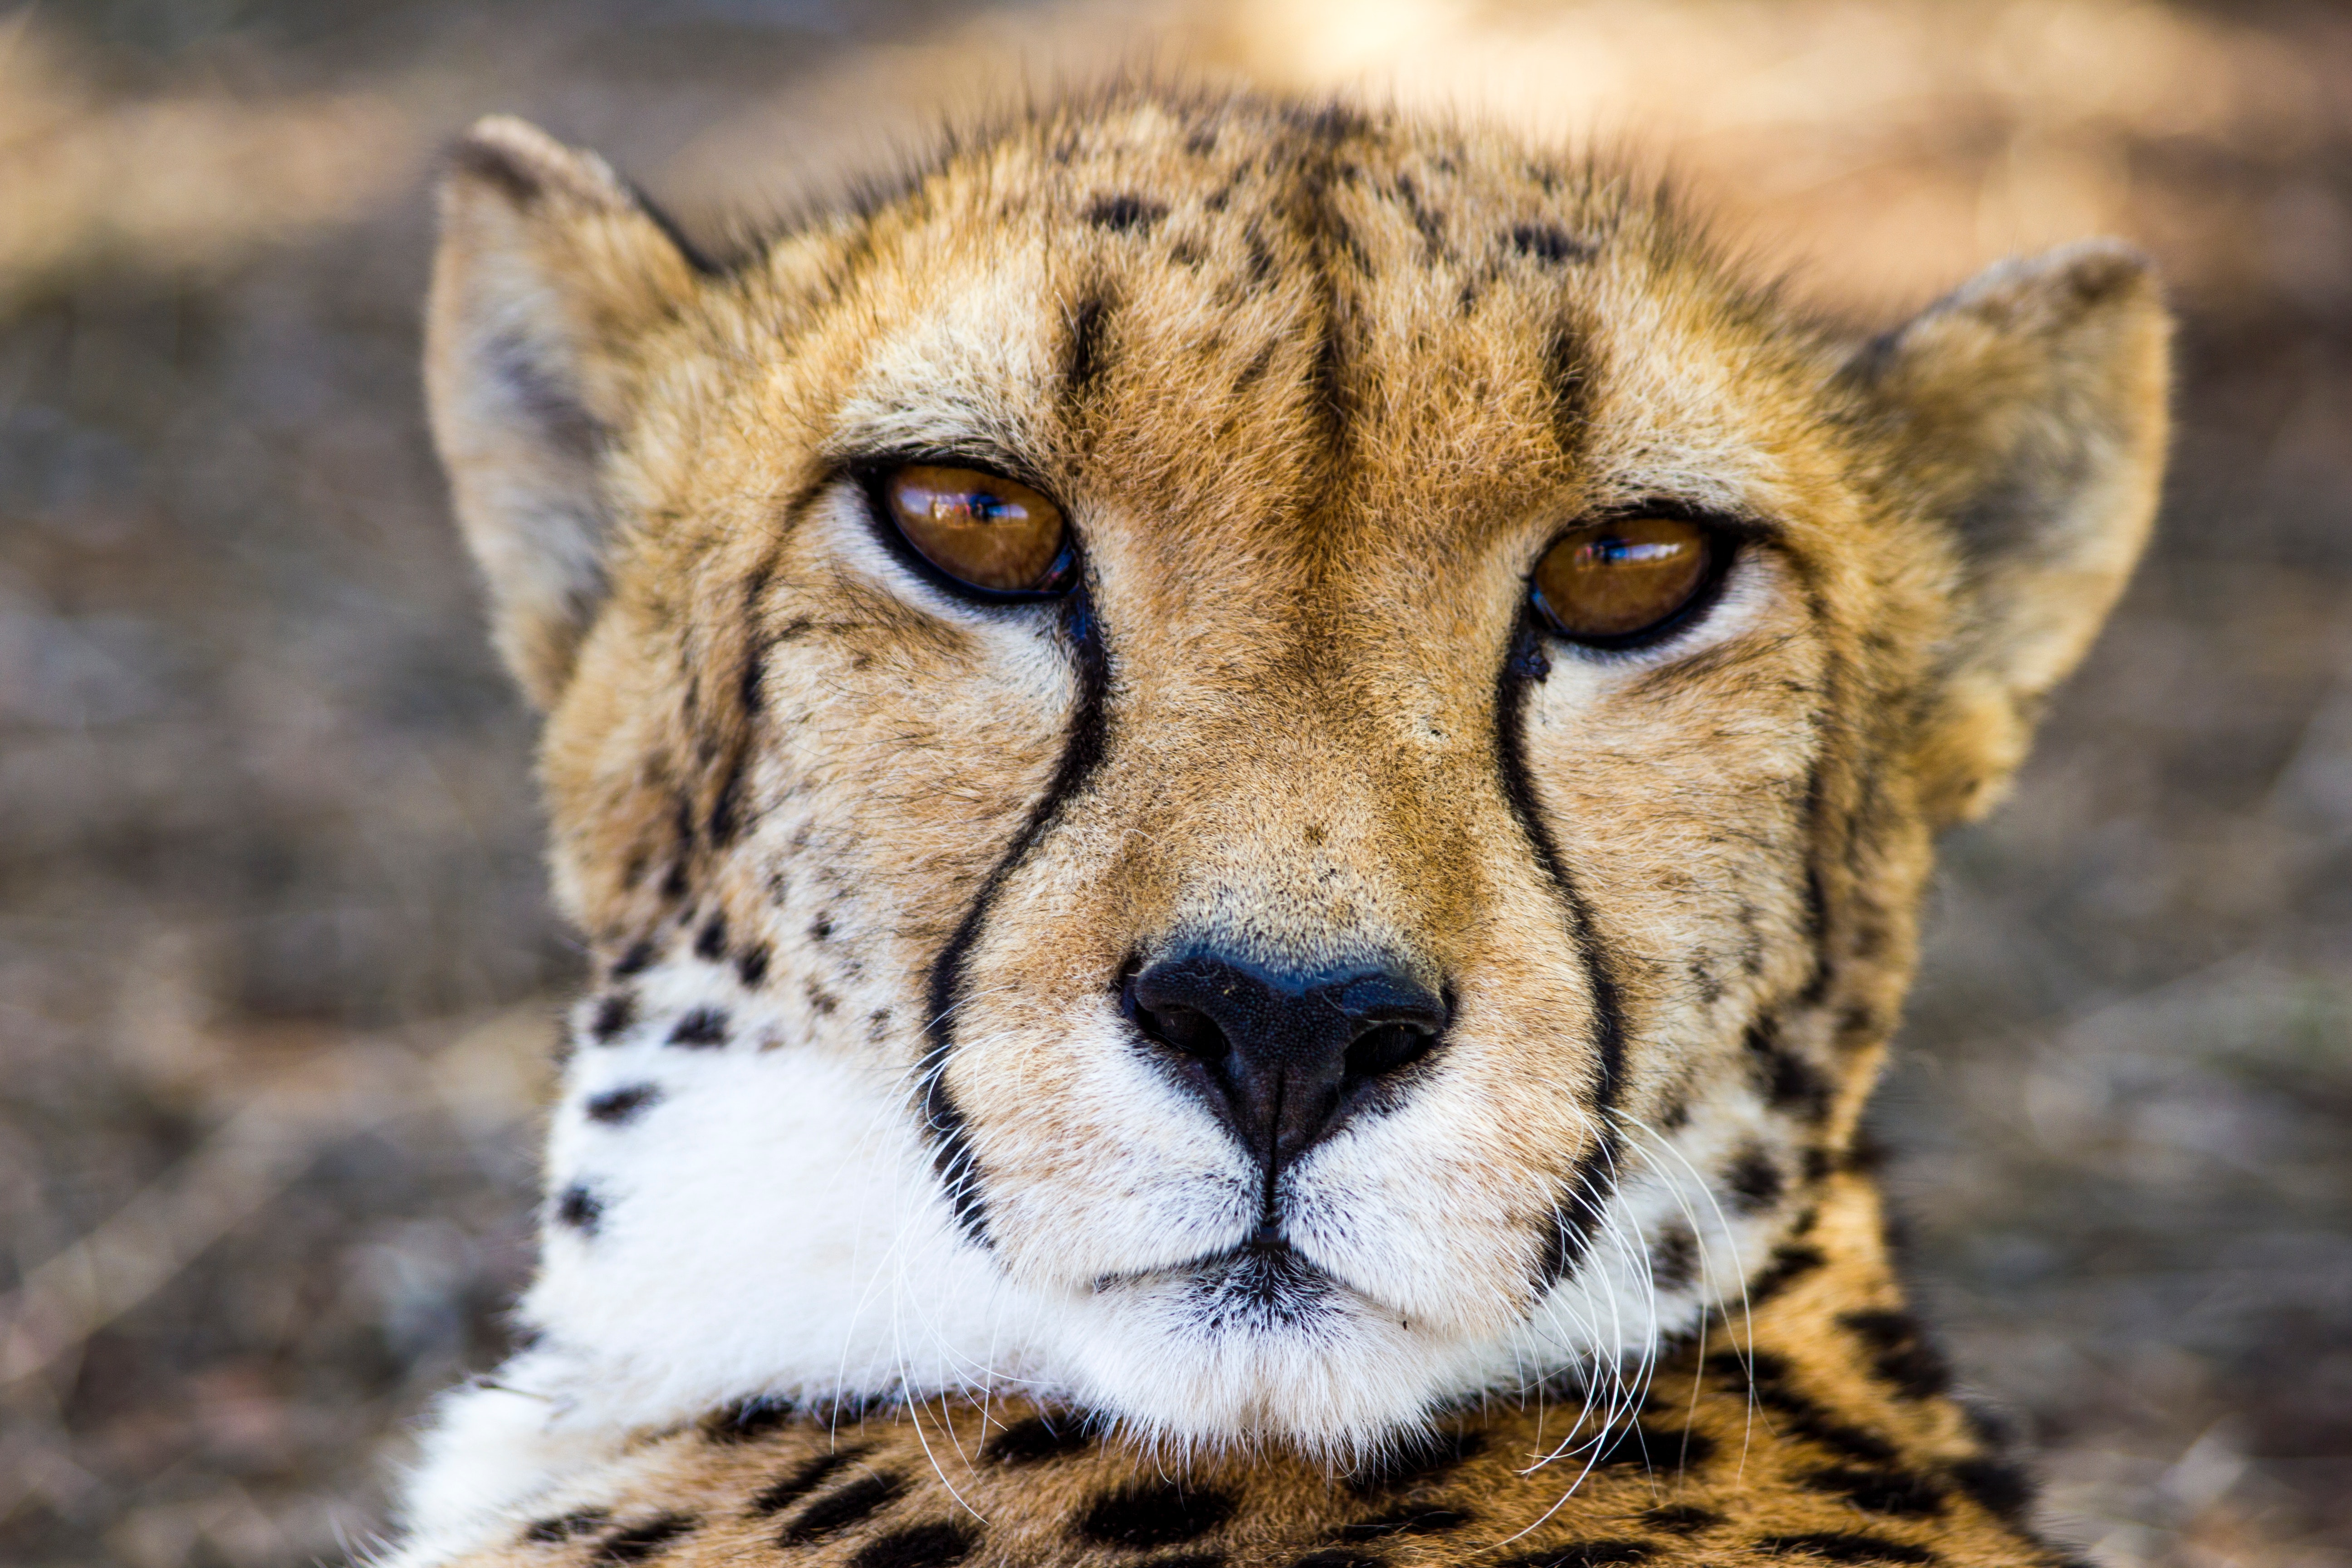 Adult cheetah photo